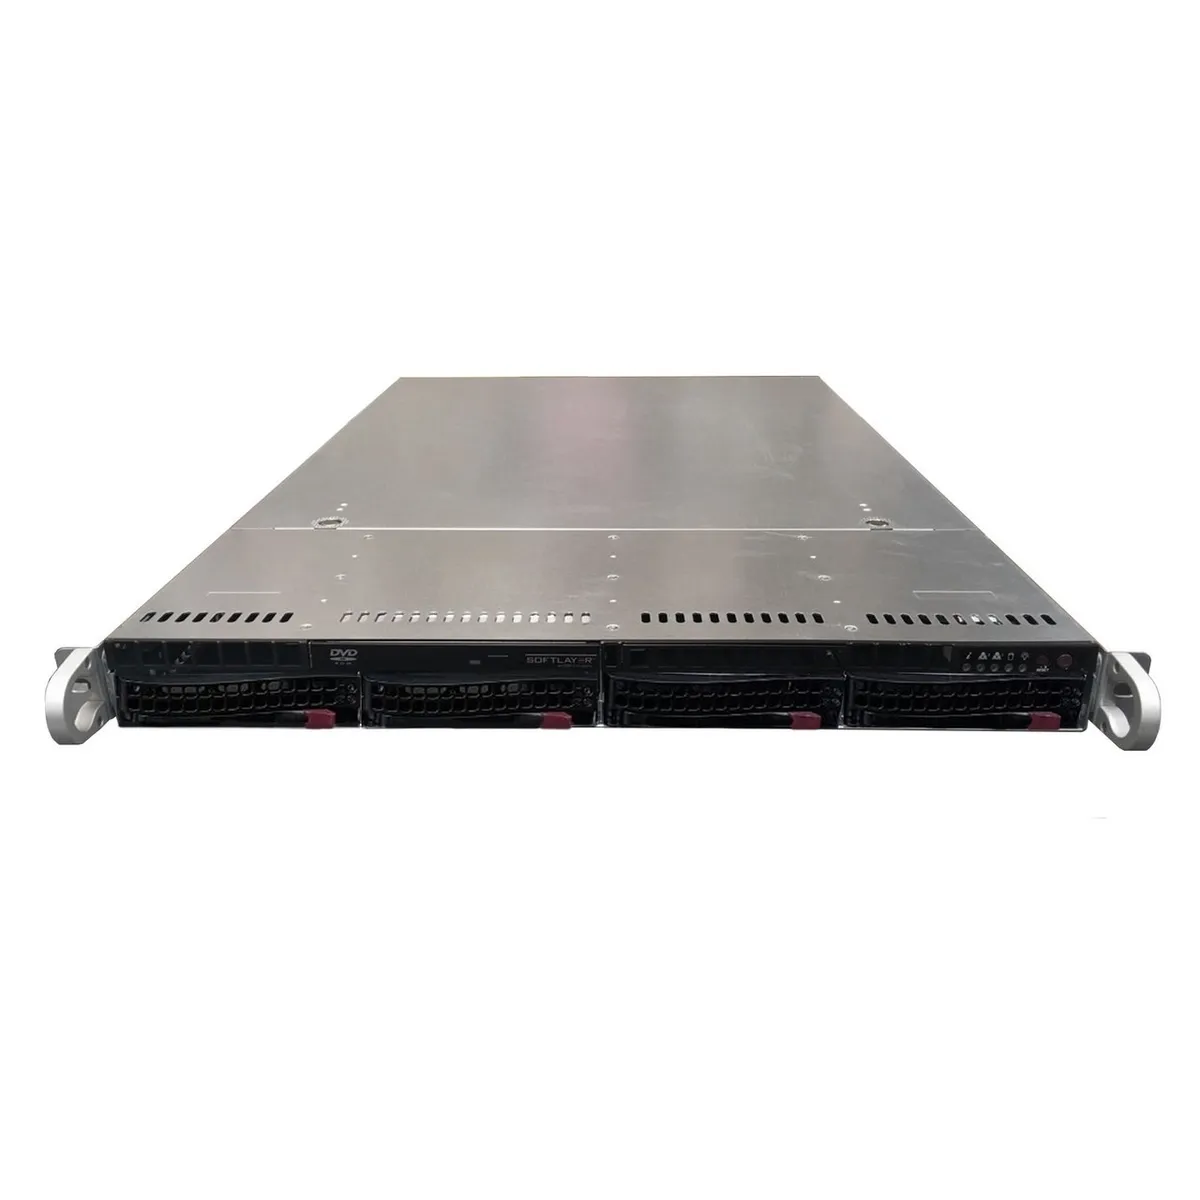 SuperMicro CSE-815 (X9DRi-LN4F+) 4x LFF Hot-Swap SAS (560W PSU) 1U Barebones Server